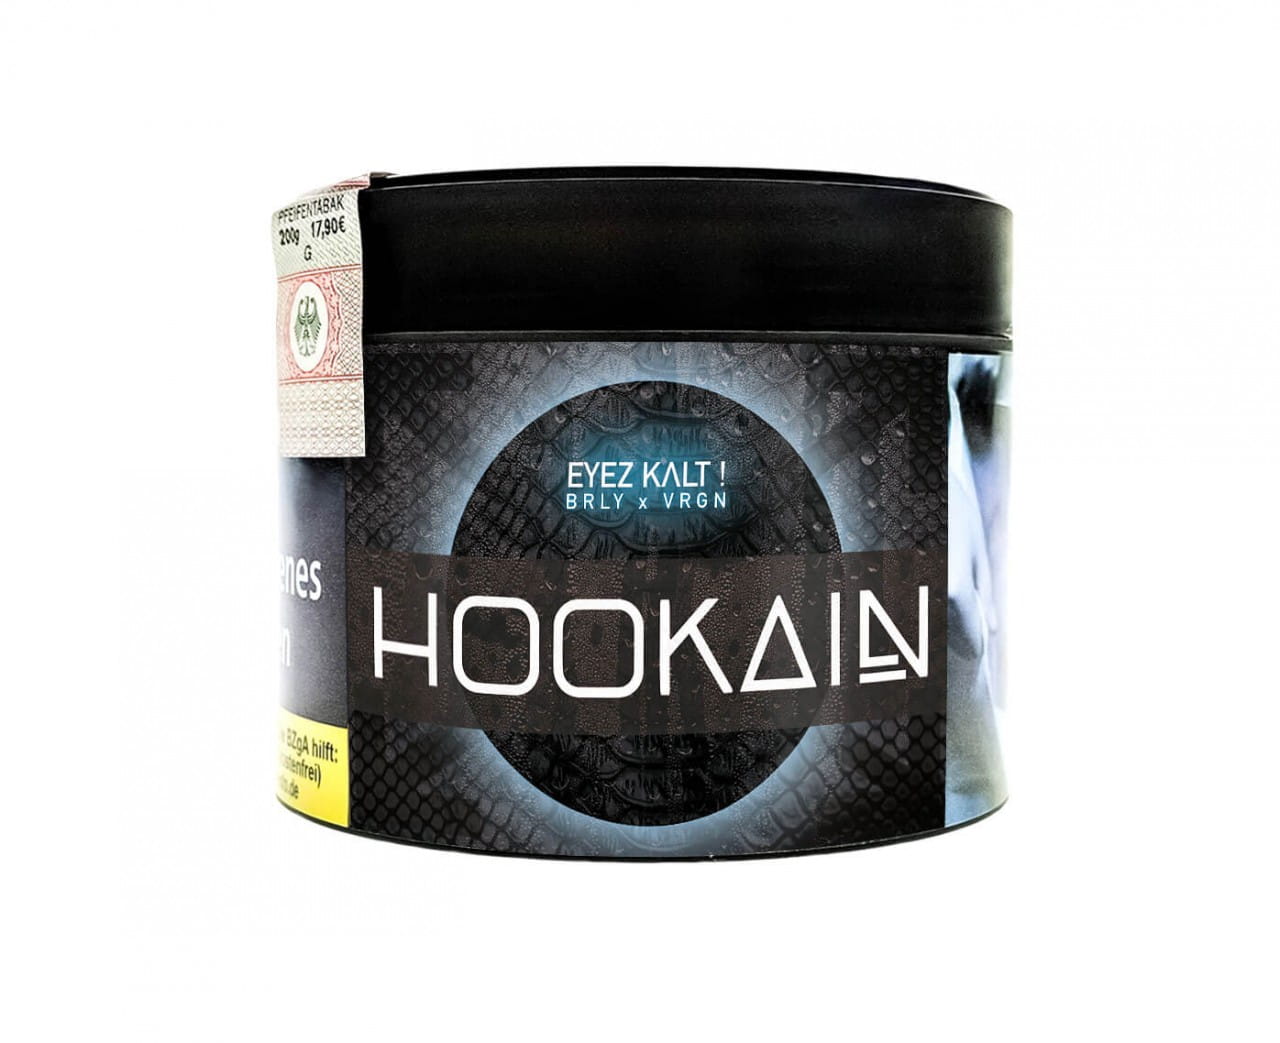 Hookain Burley Tabak - Eyez Kalt 200 g unter Shisha Tabak / Hookain Tabak